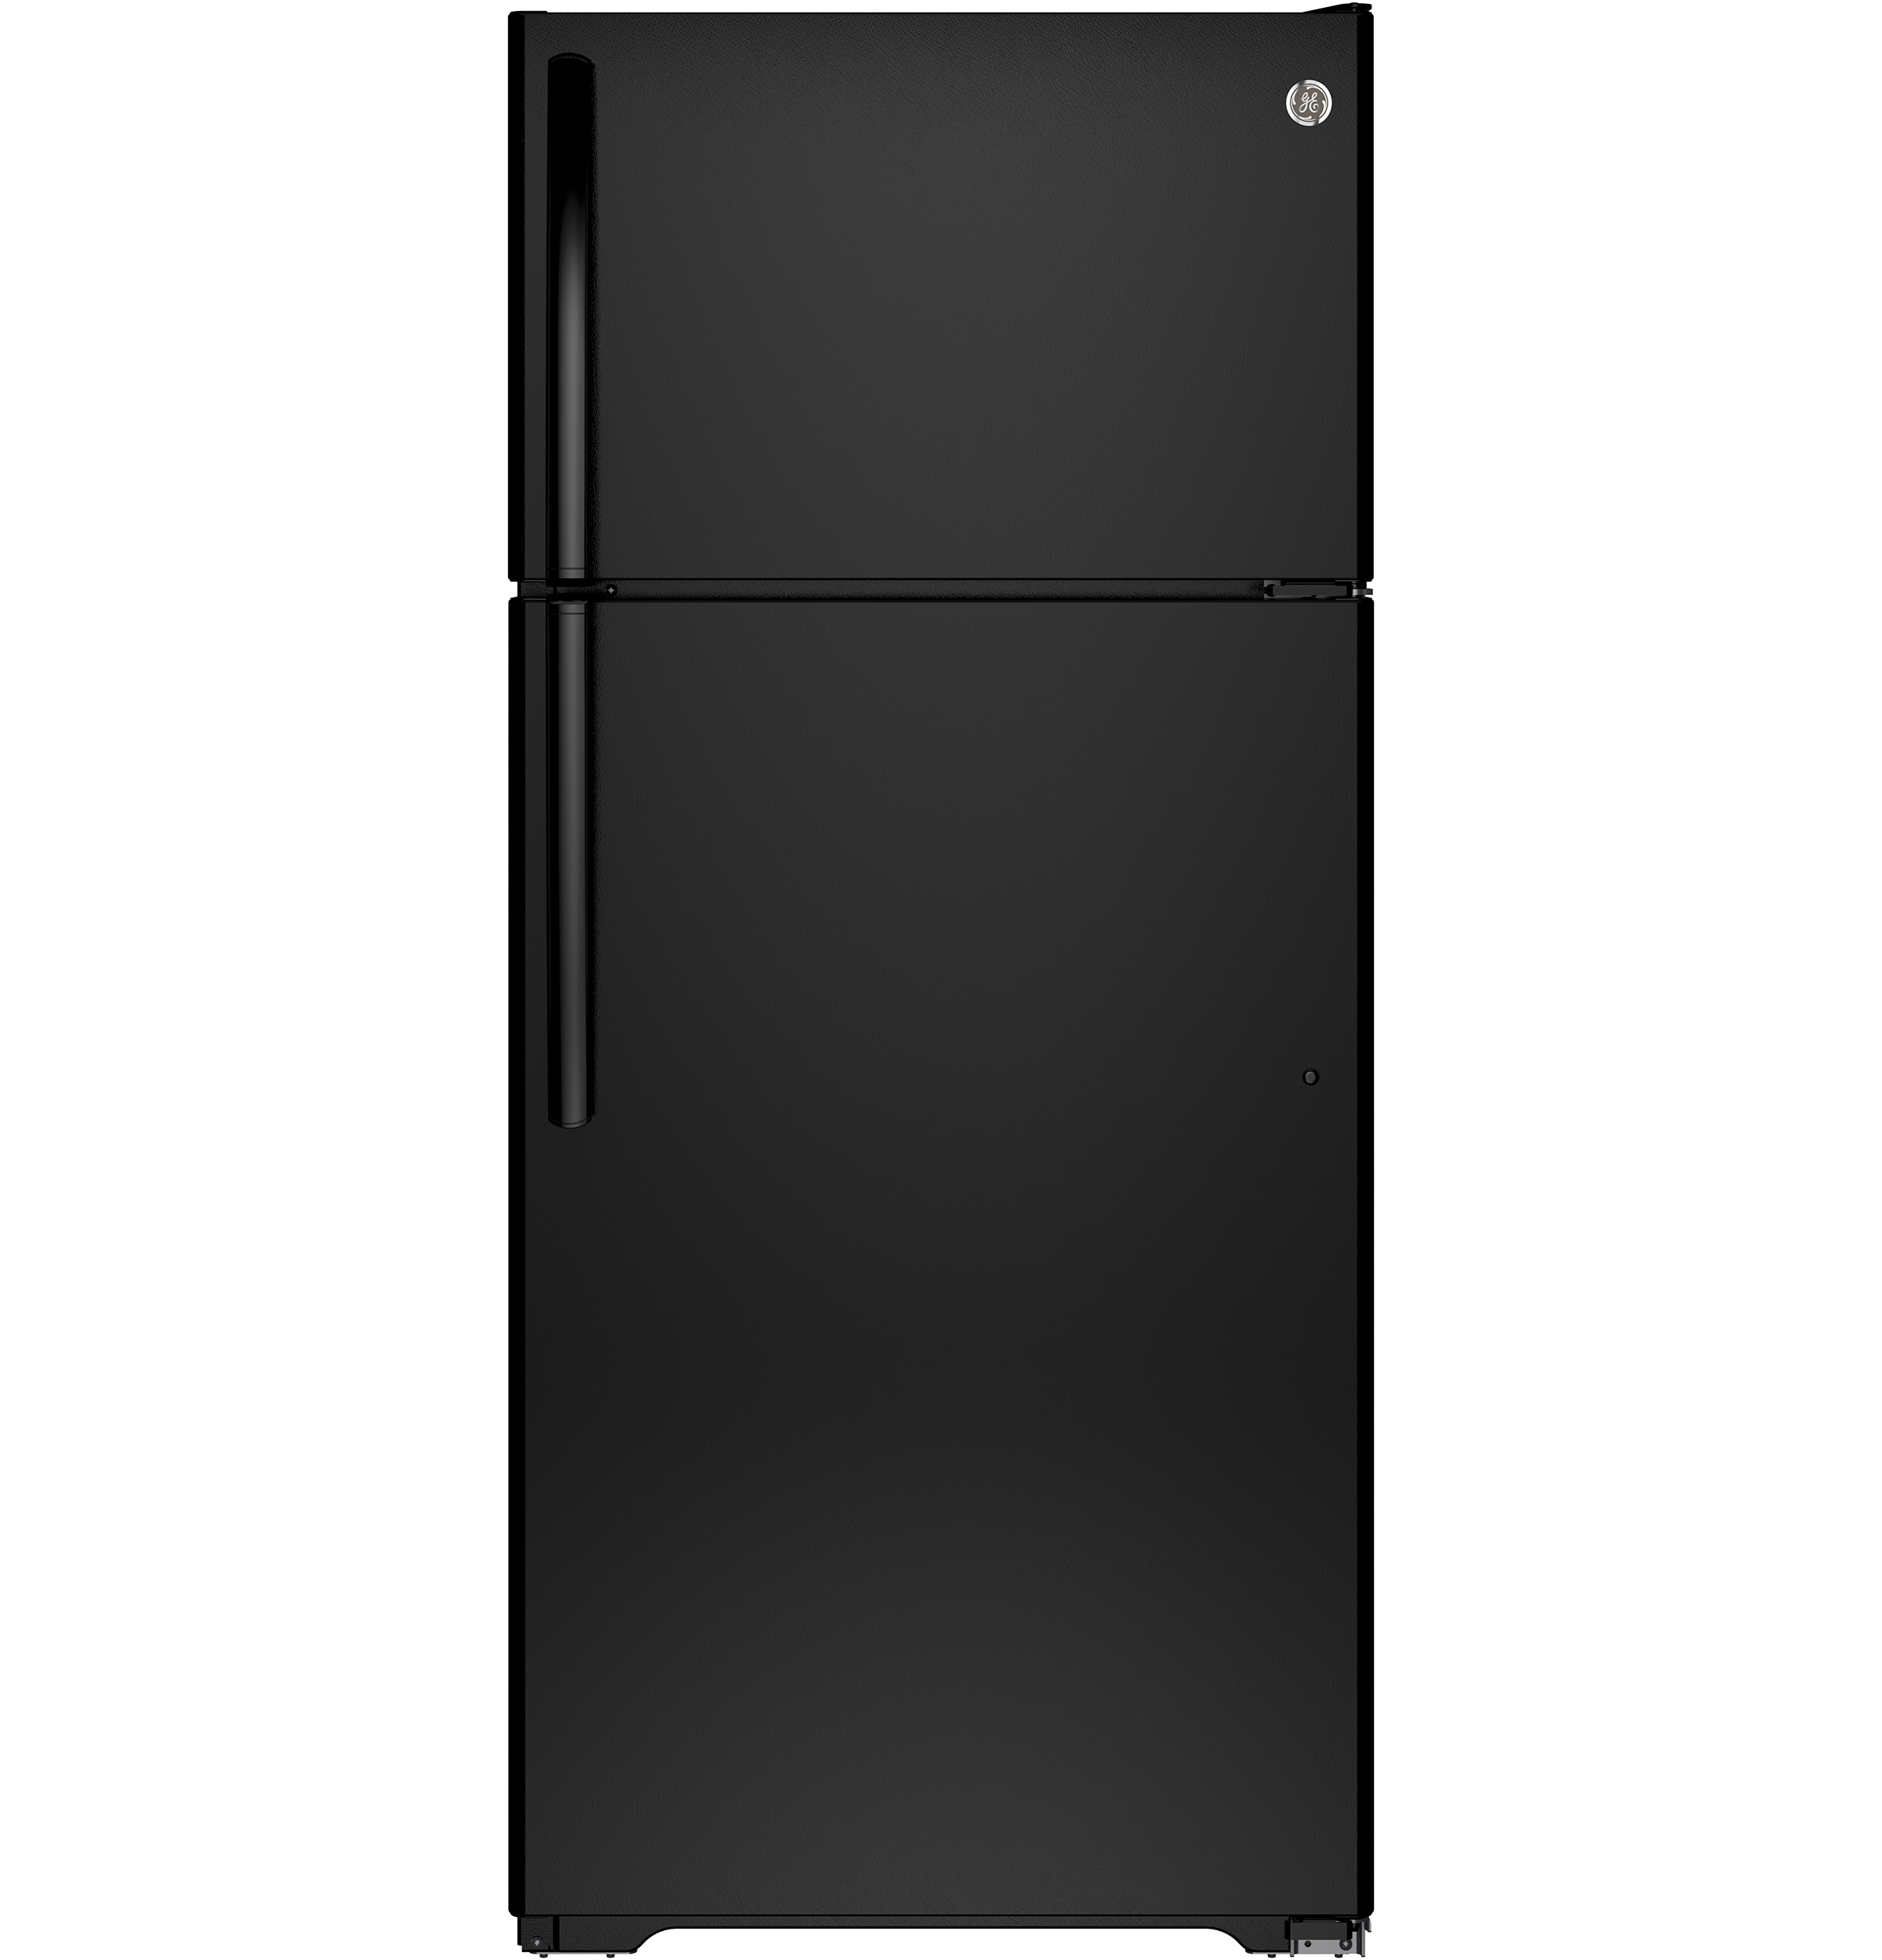 GE® ENERGY STAR® 15.5 Cu. Ft. Top-Freezer Refrigerator